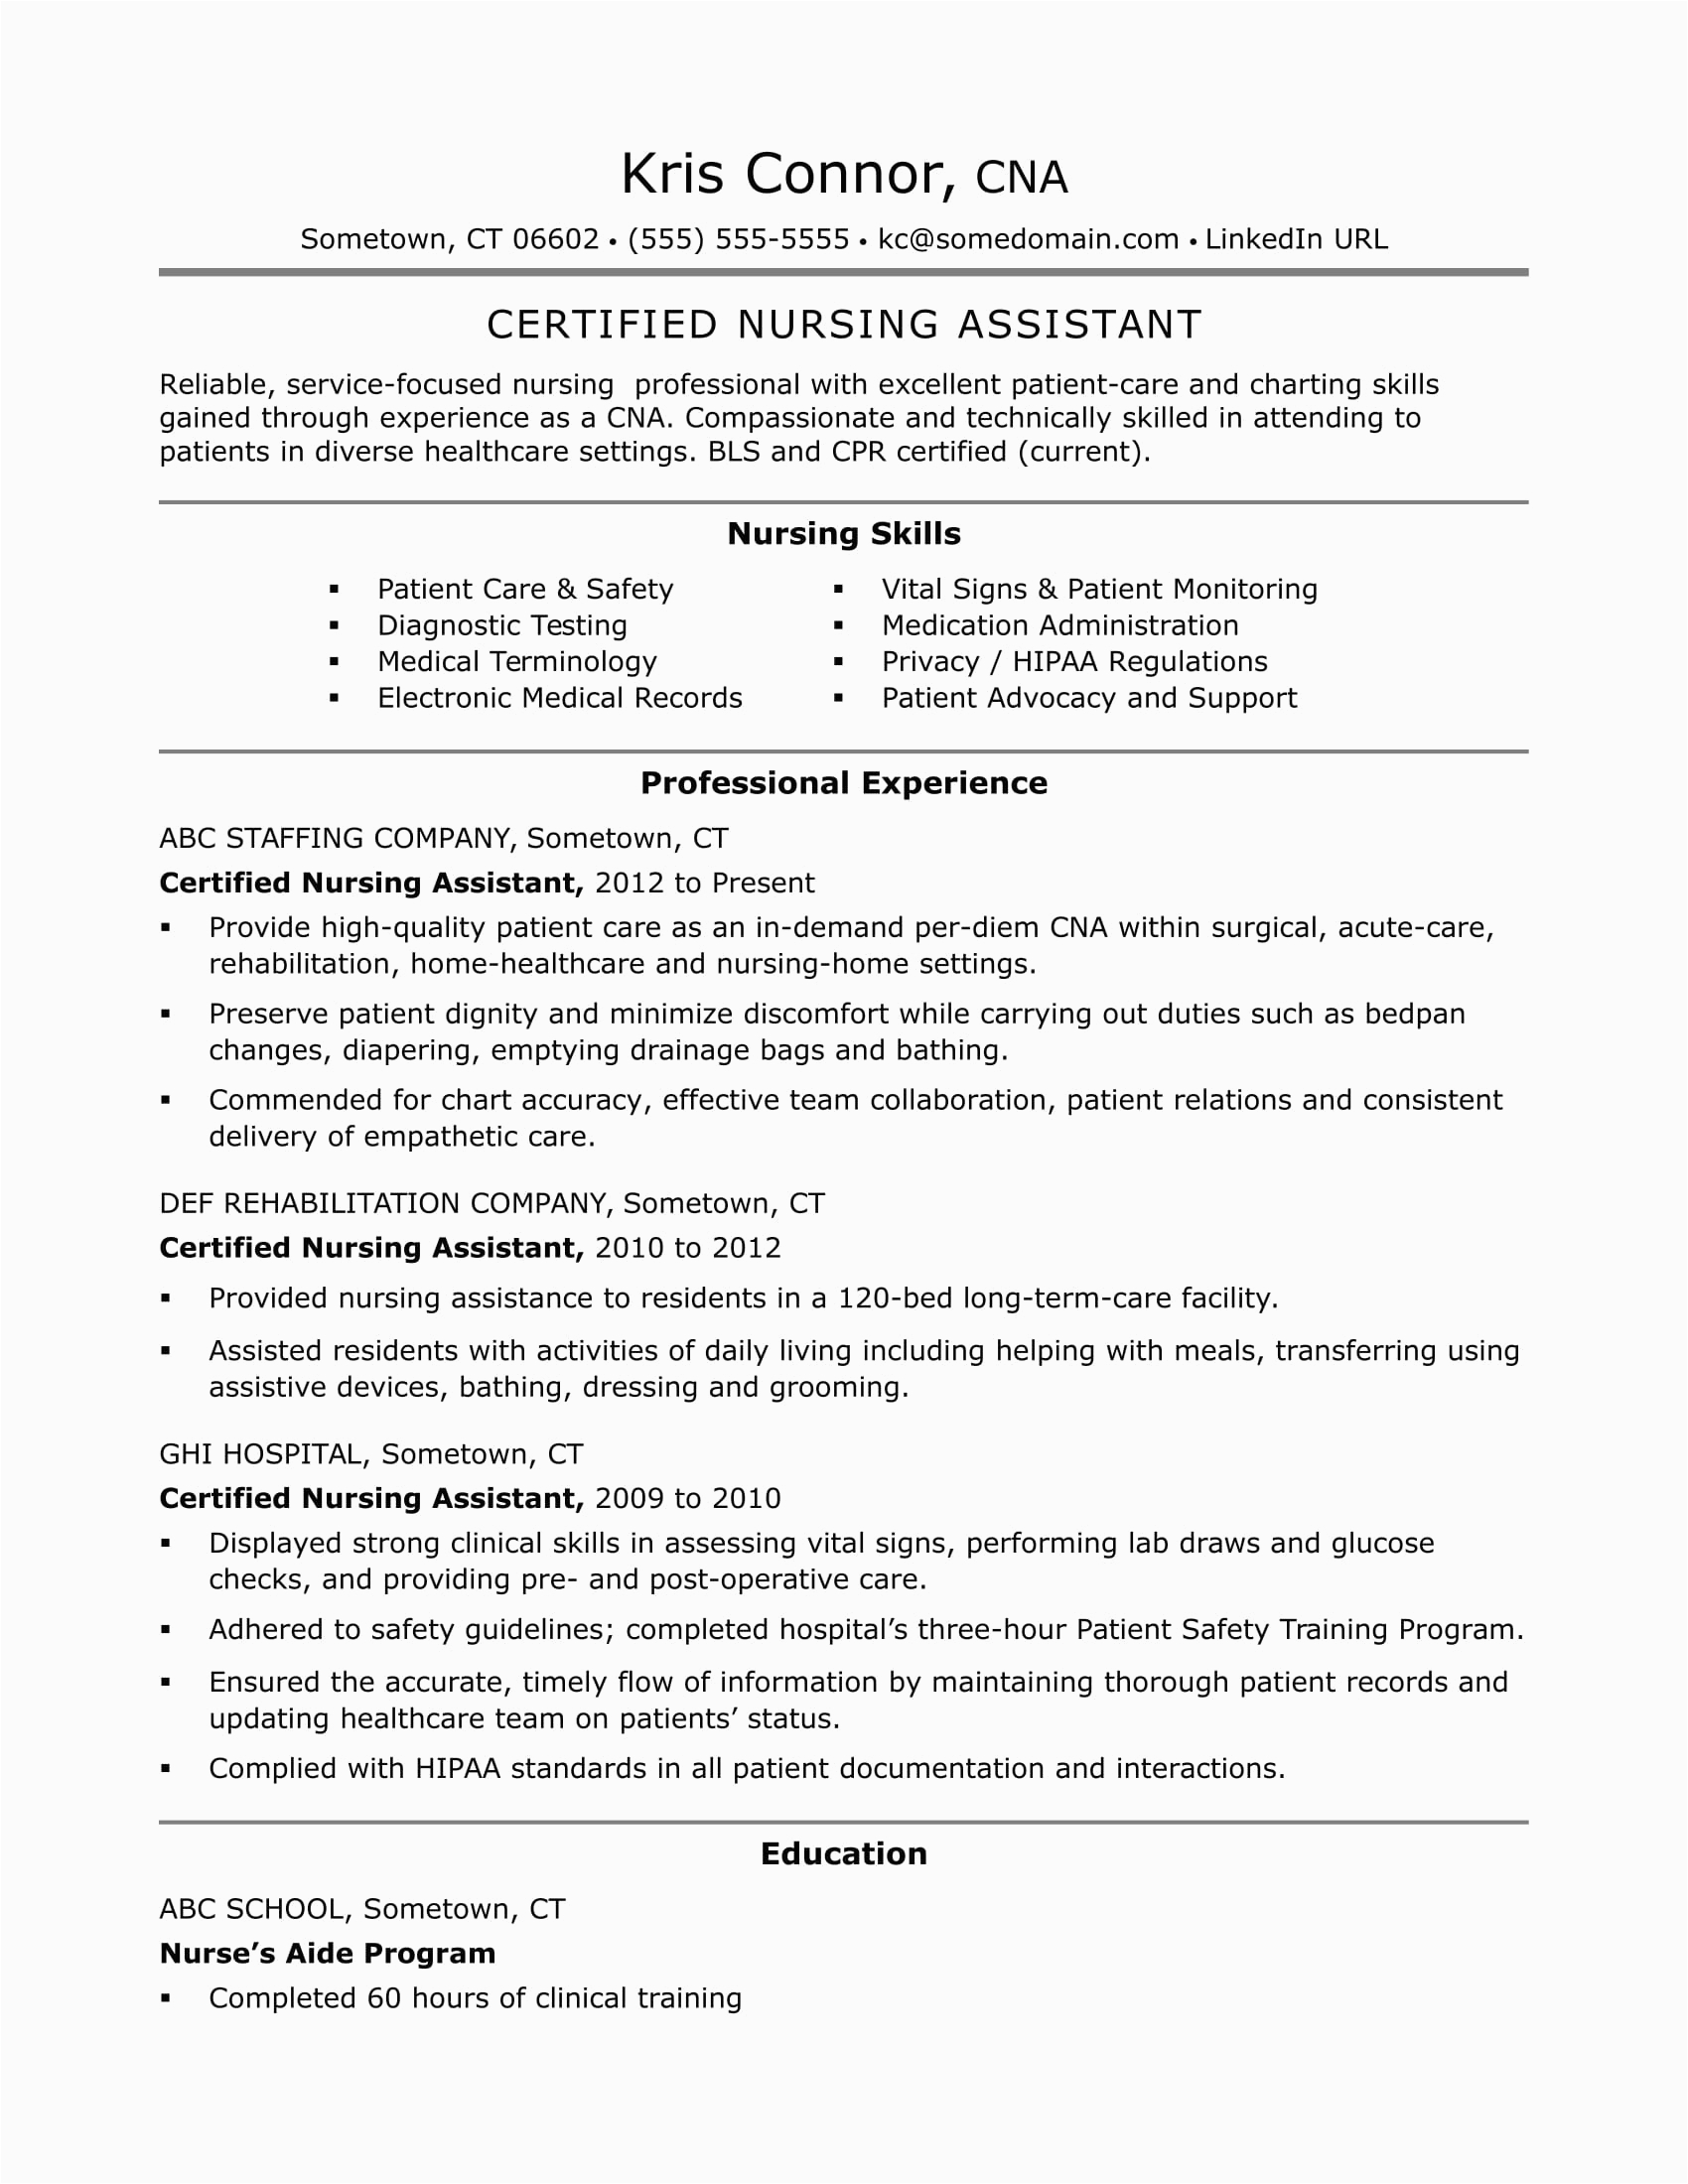 Sample Cna Resume for Hospital Position Cna Resume Examples Skills for Cnas